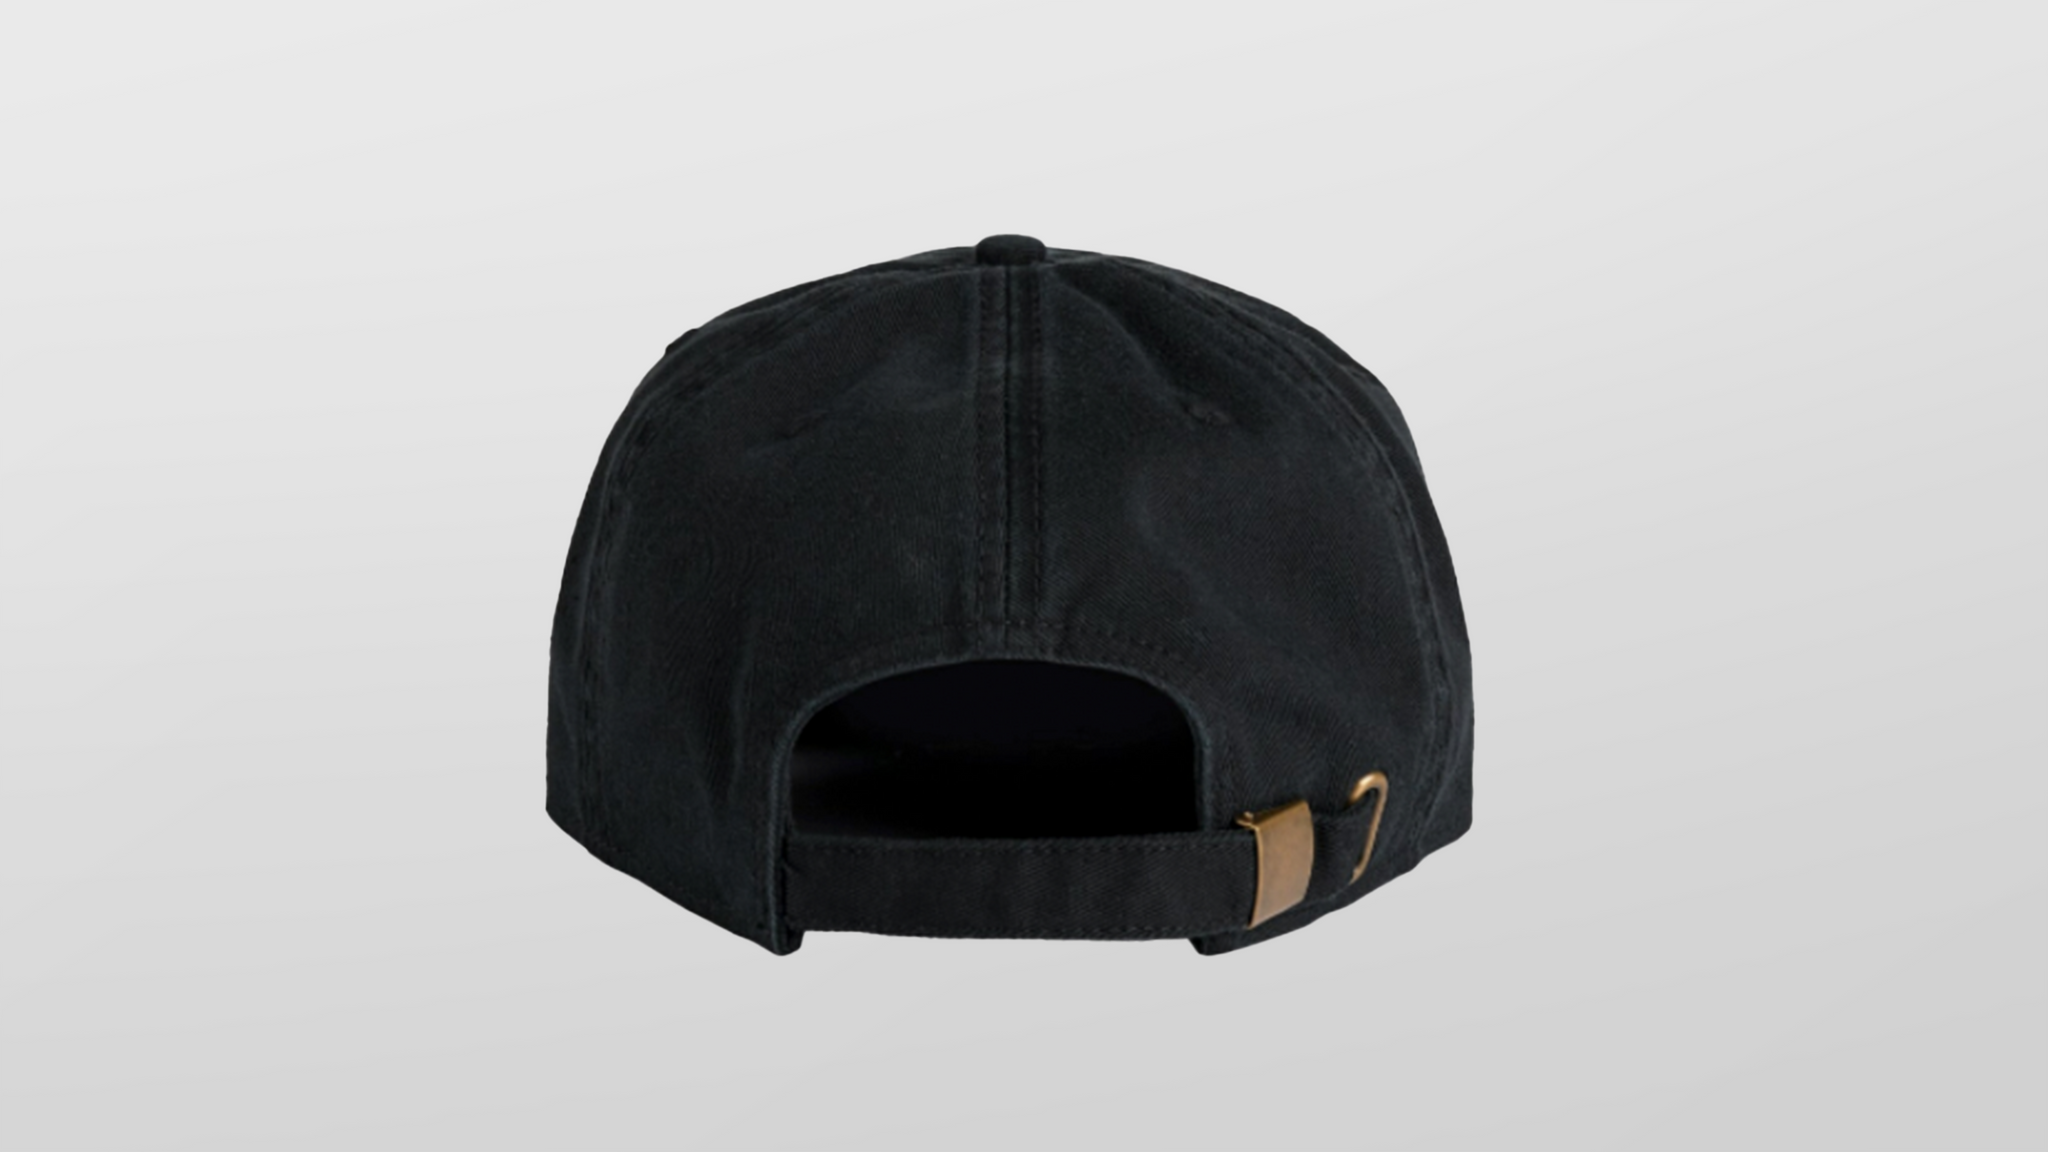 Incompletegl Unisex Oni Mask "Illegal Activities"- Hat - Black (Size - Universal)